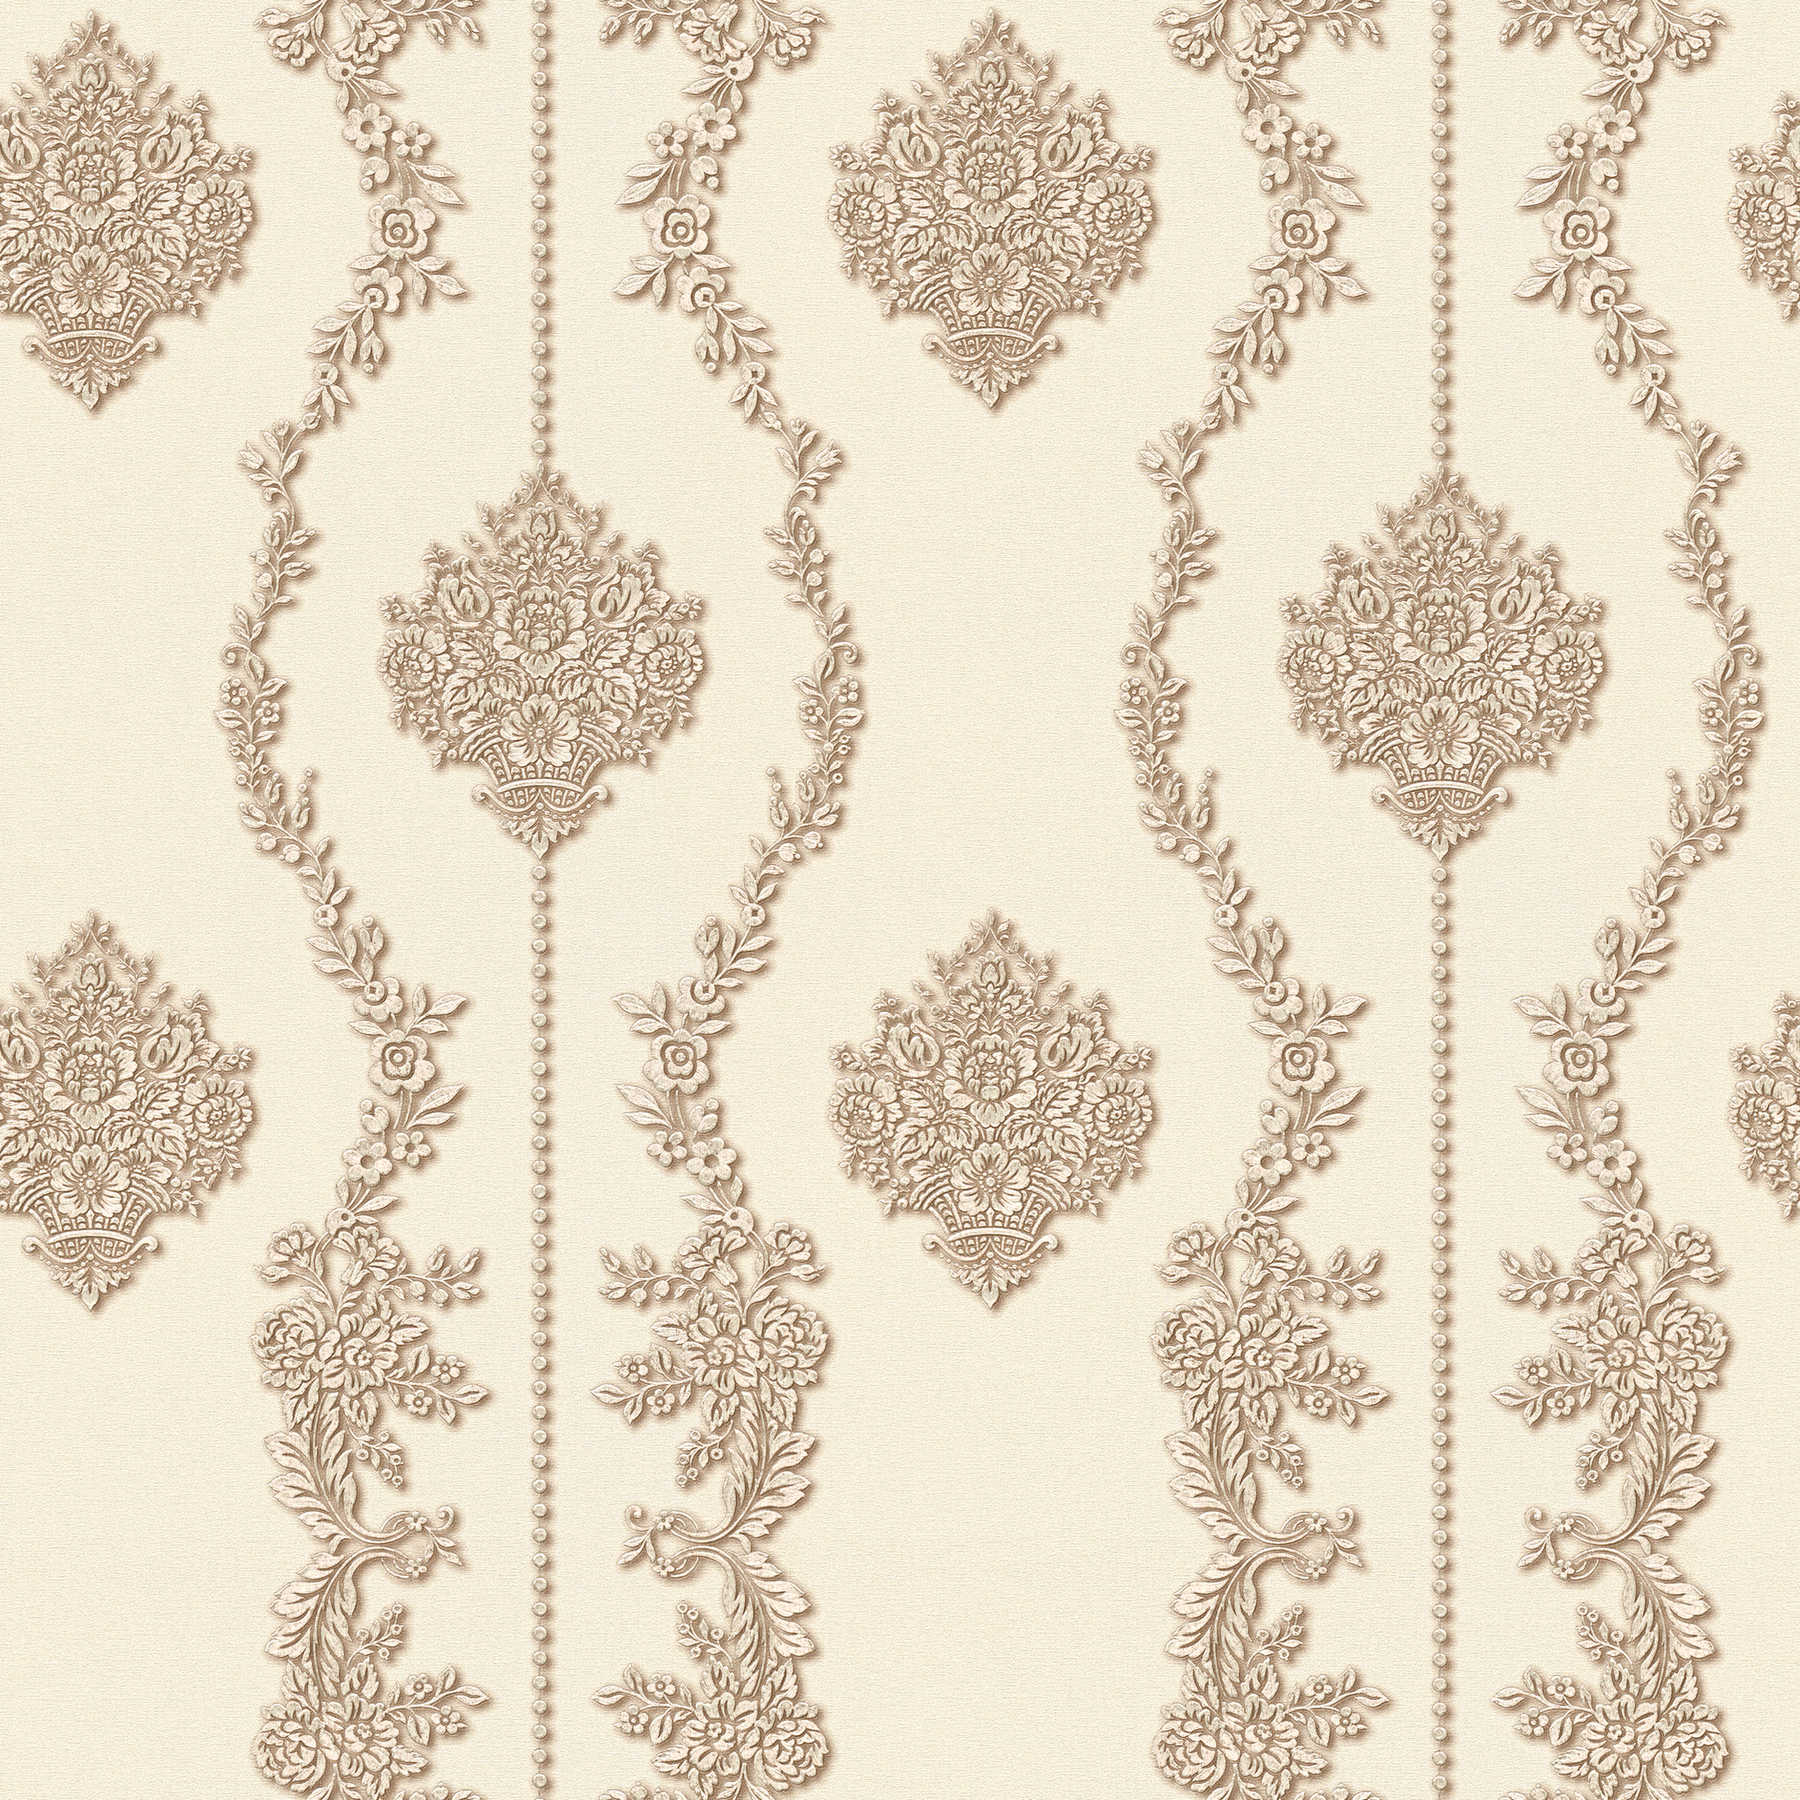 Classic decor wallpaper floral ornament pattern - beige, metallic
